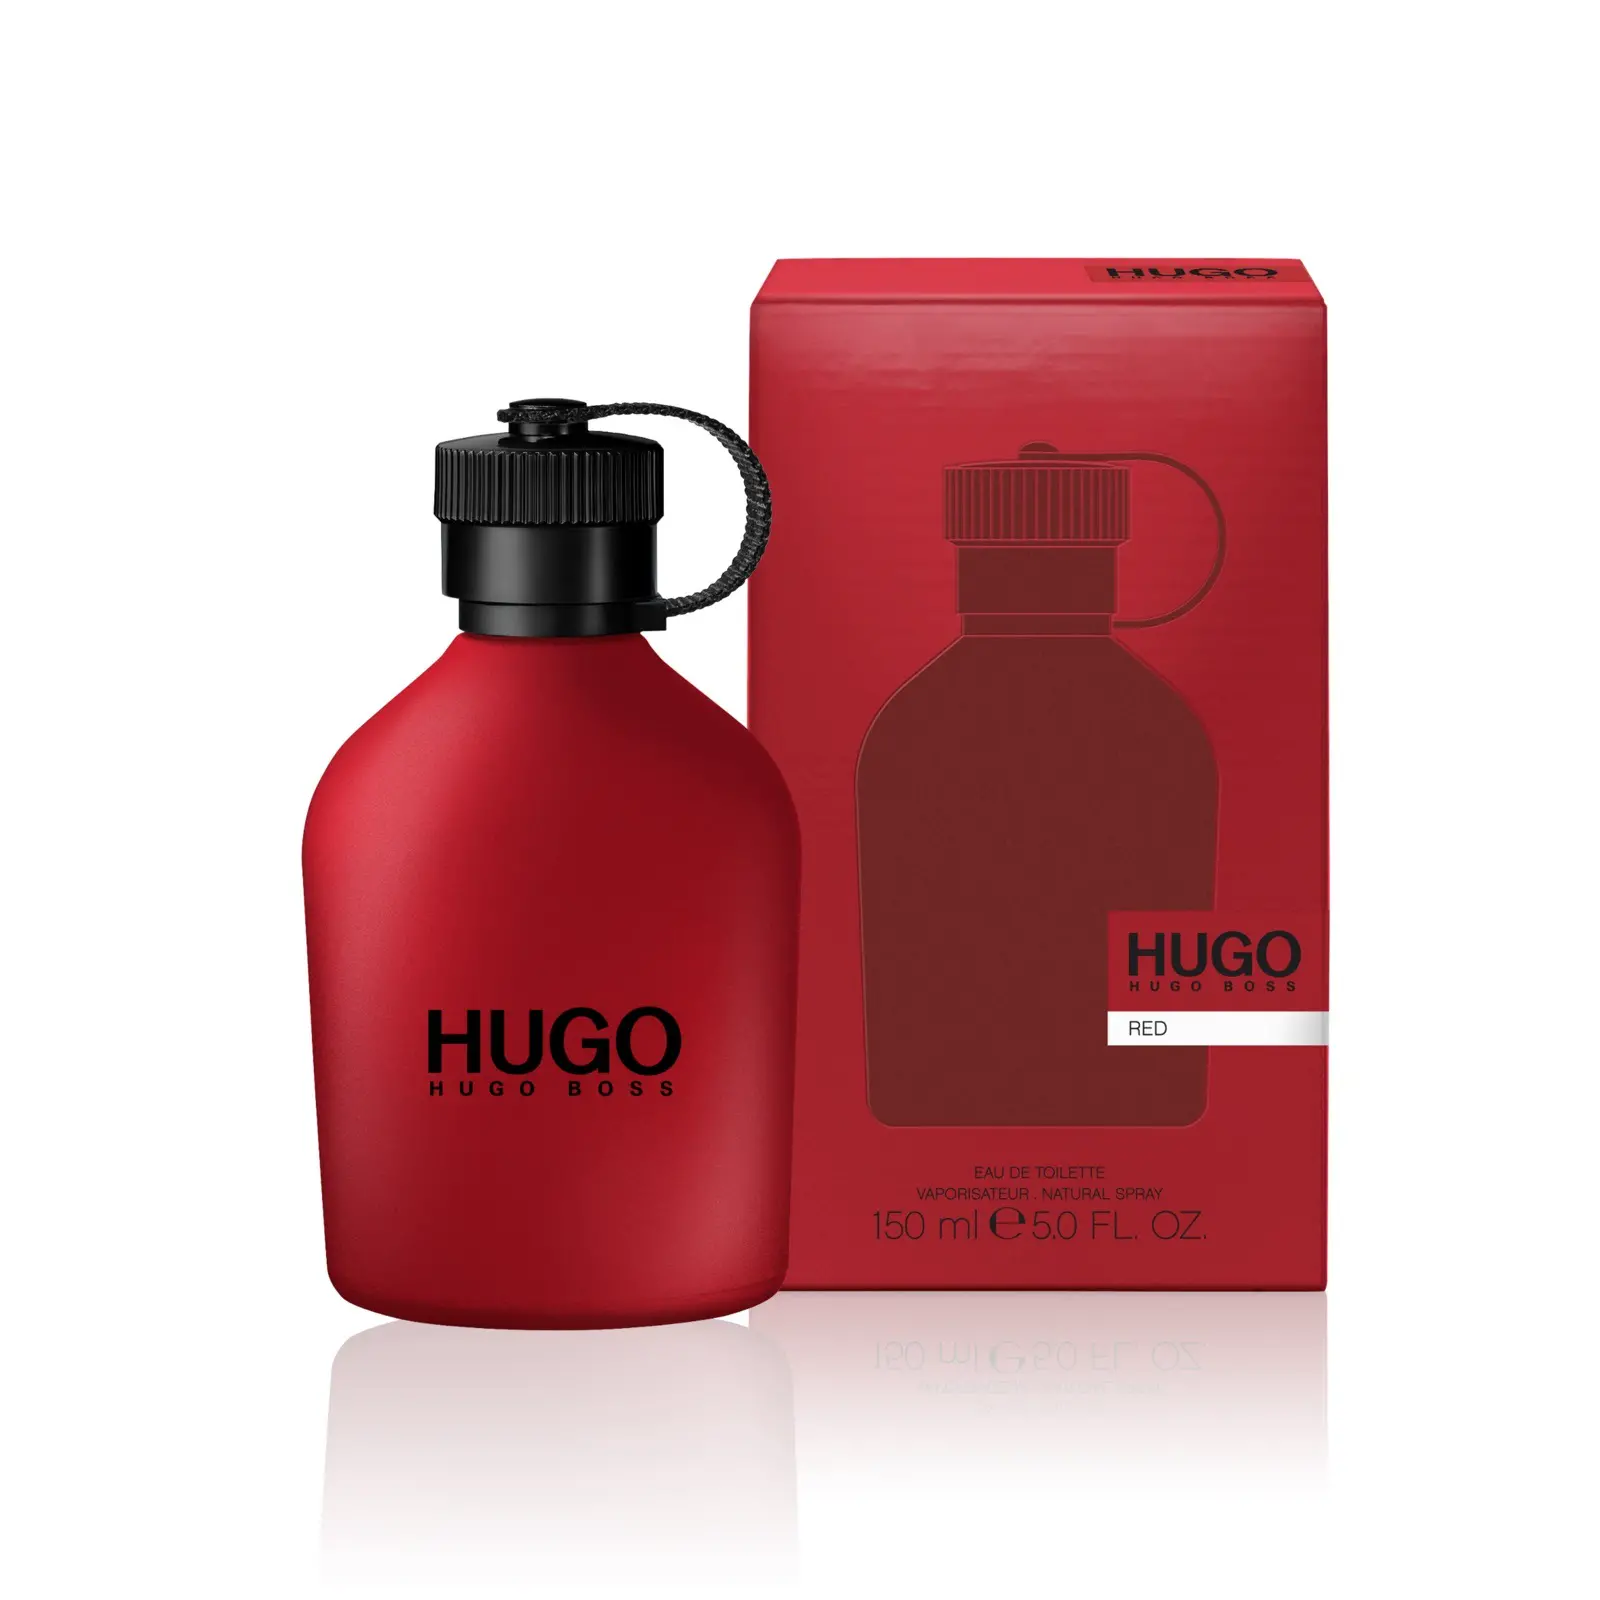 Hugo boss красные. Туалетная вода Hugo Boss Hugo man, 150 мл. 117. Hugo Boss Hugo Red 75мл. Hugo Boss туалетная вода 100 мл. Hugo Boss Red EDT Хьюго босс ред туалетная вода 150 ml.